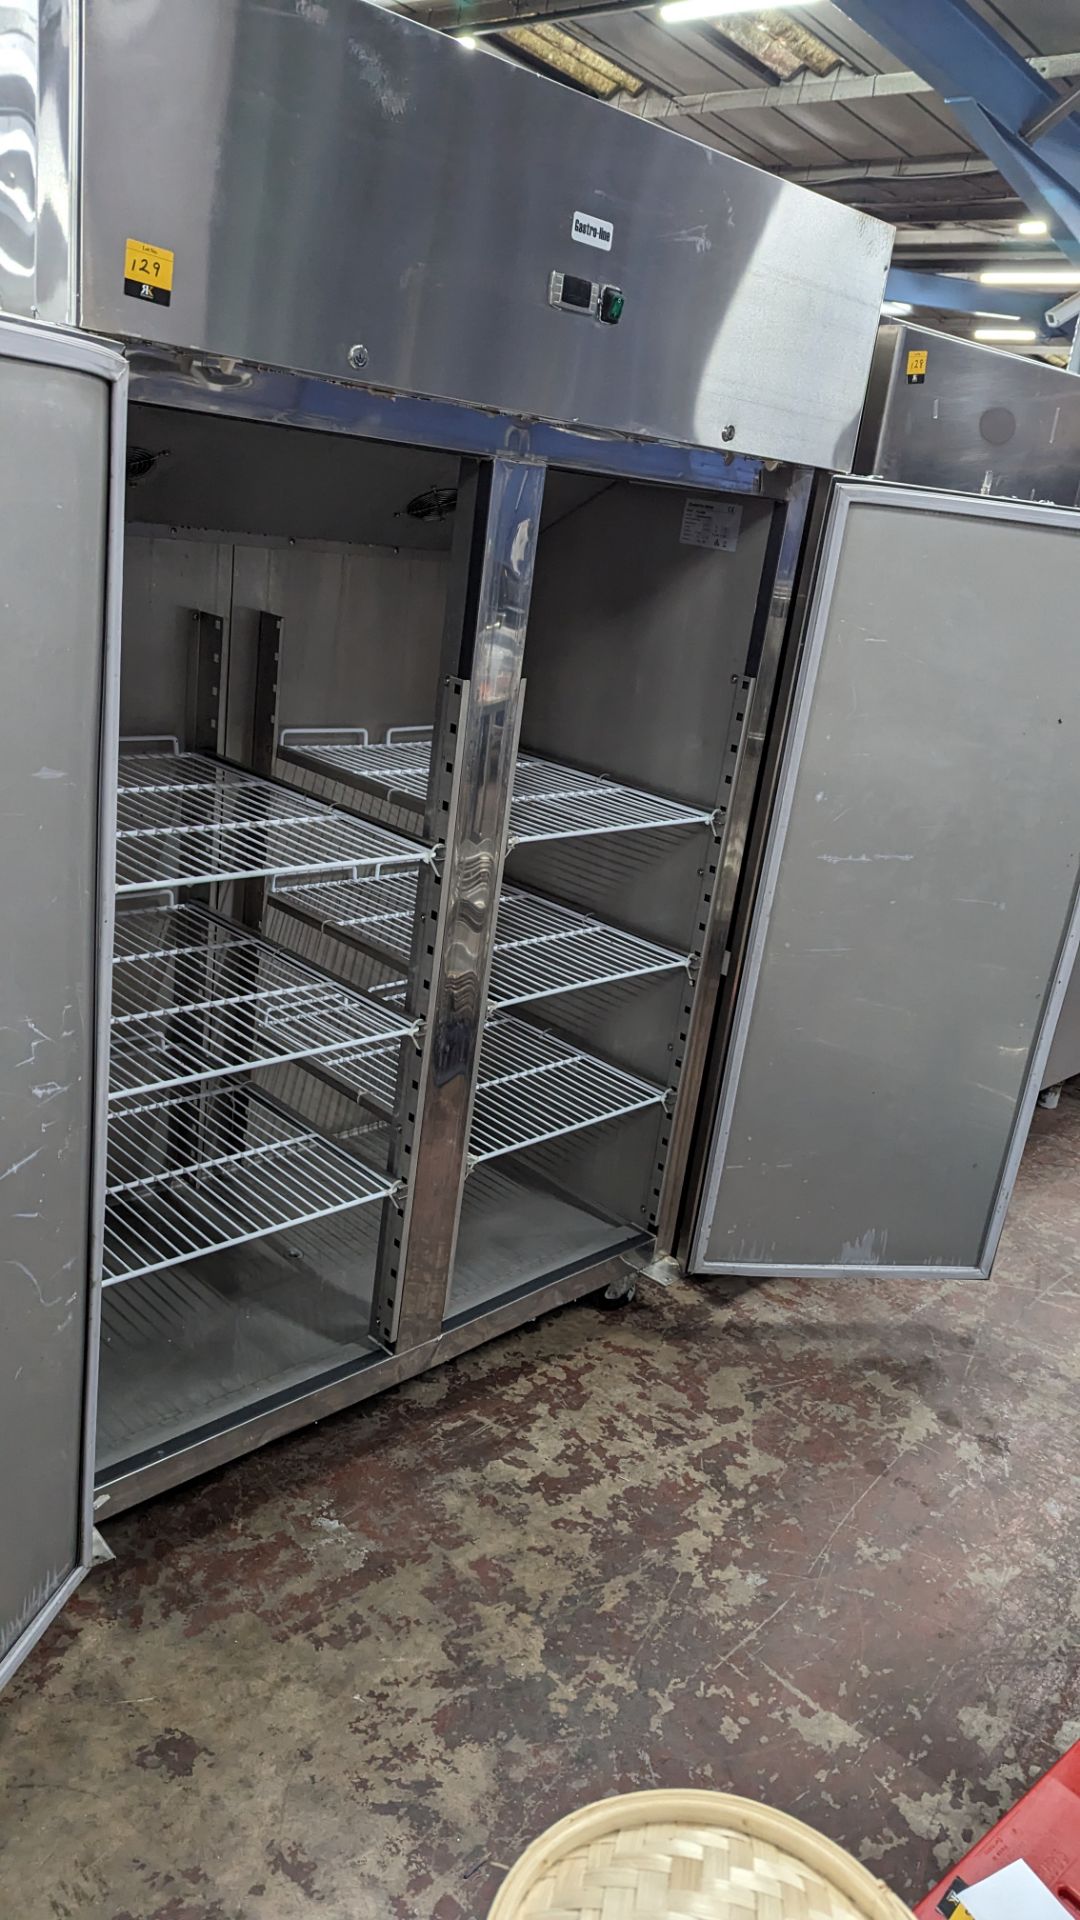 Gastro-Line large mobile stainless steel twin door fridge model FZU006 - Image 6 of 8